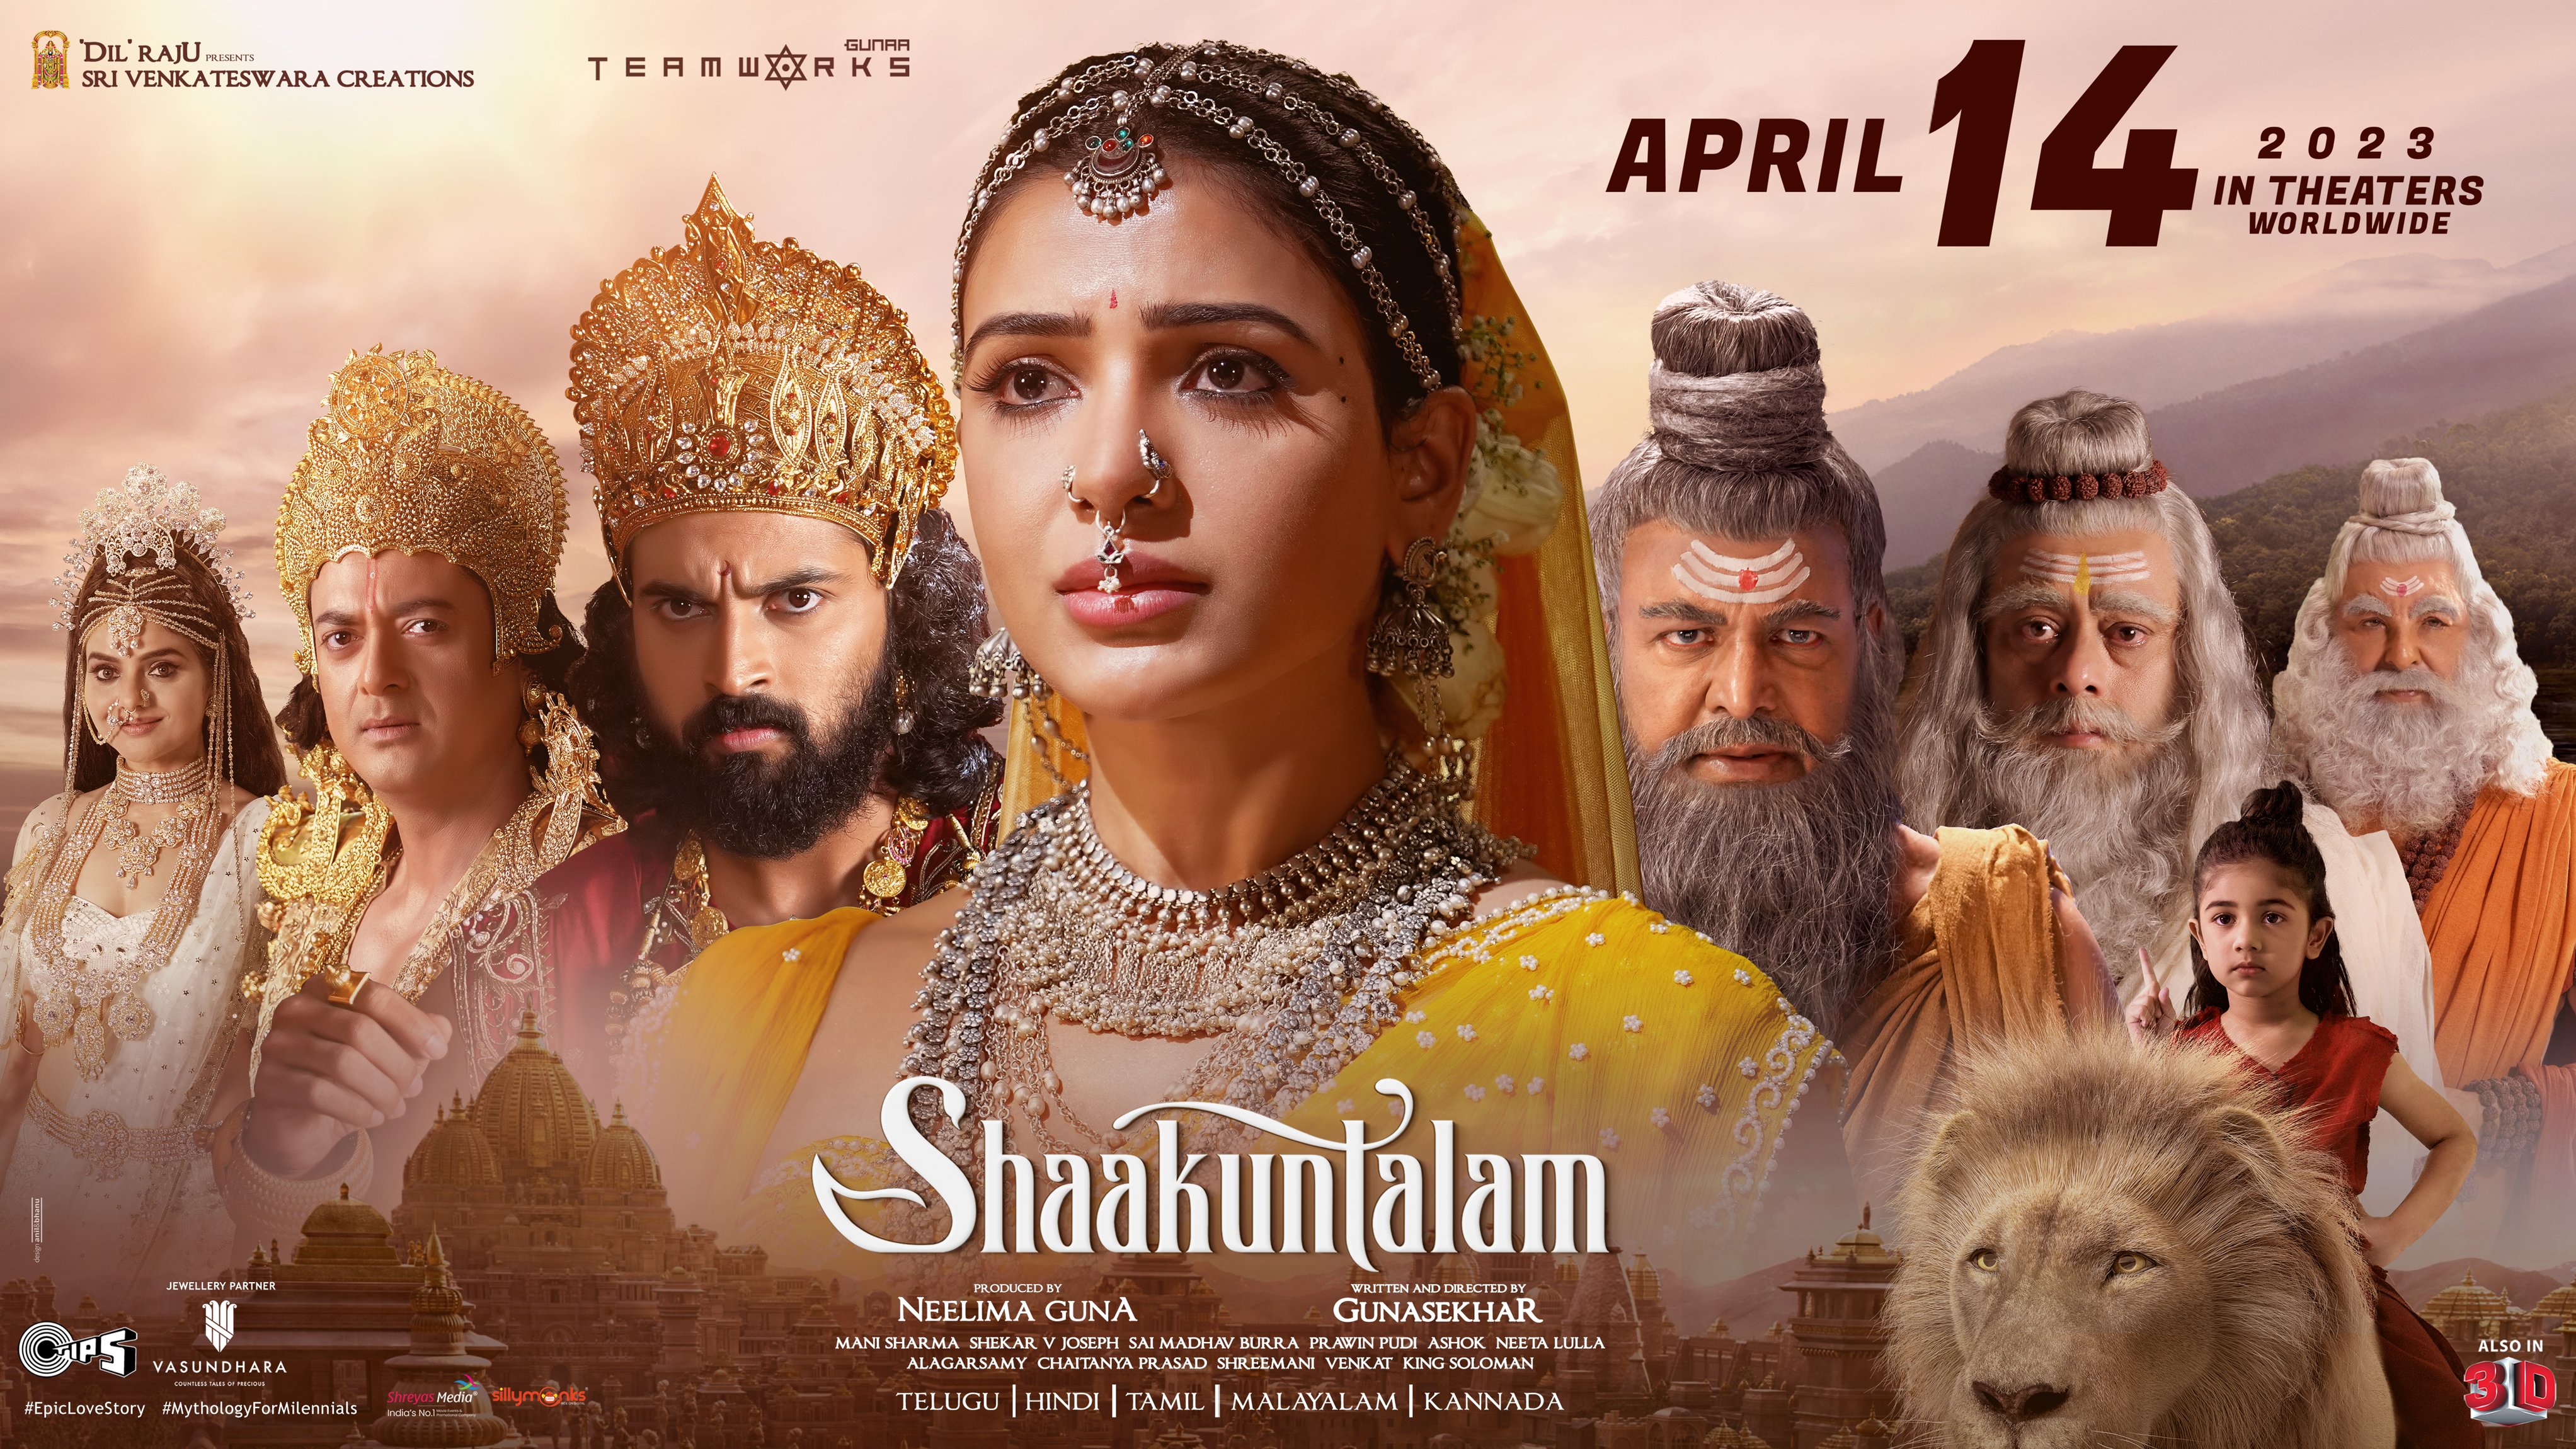 Shaakuntalam will release in cinemas worldwide on 14 April 2023.